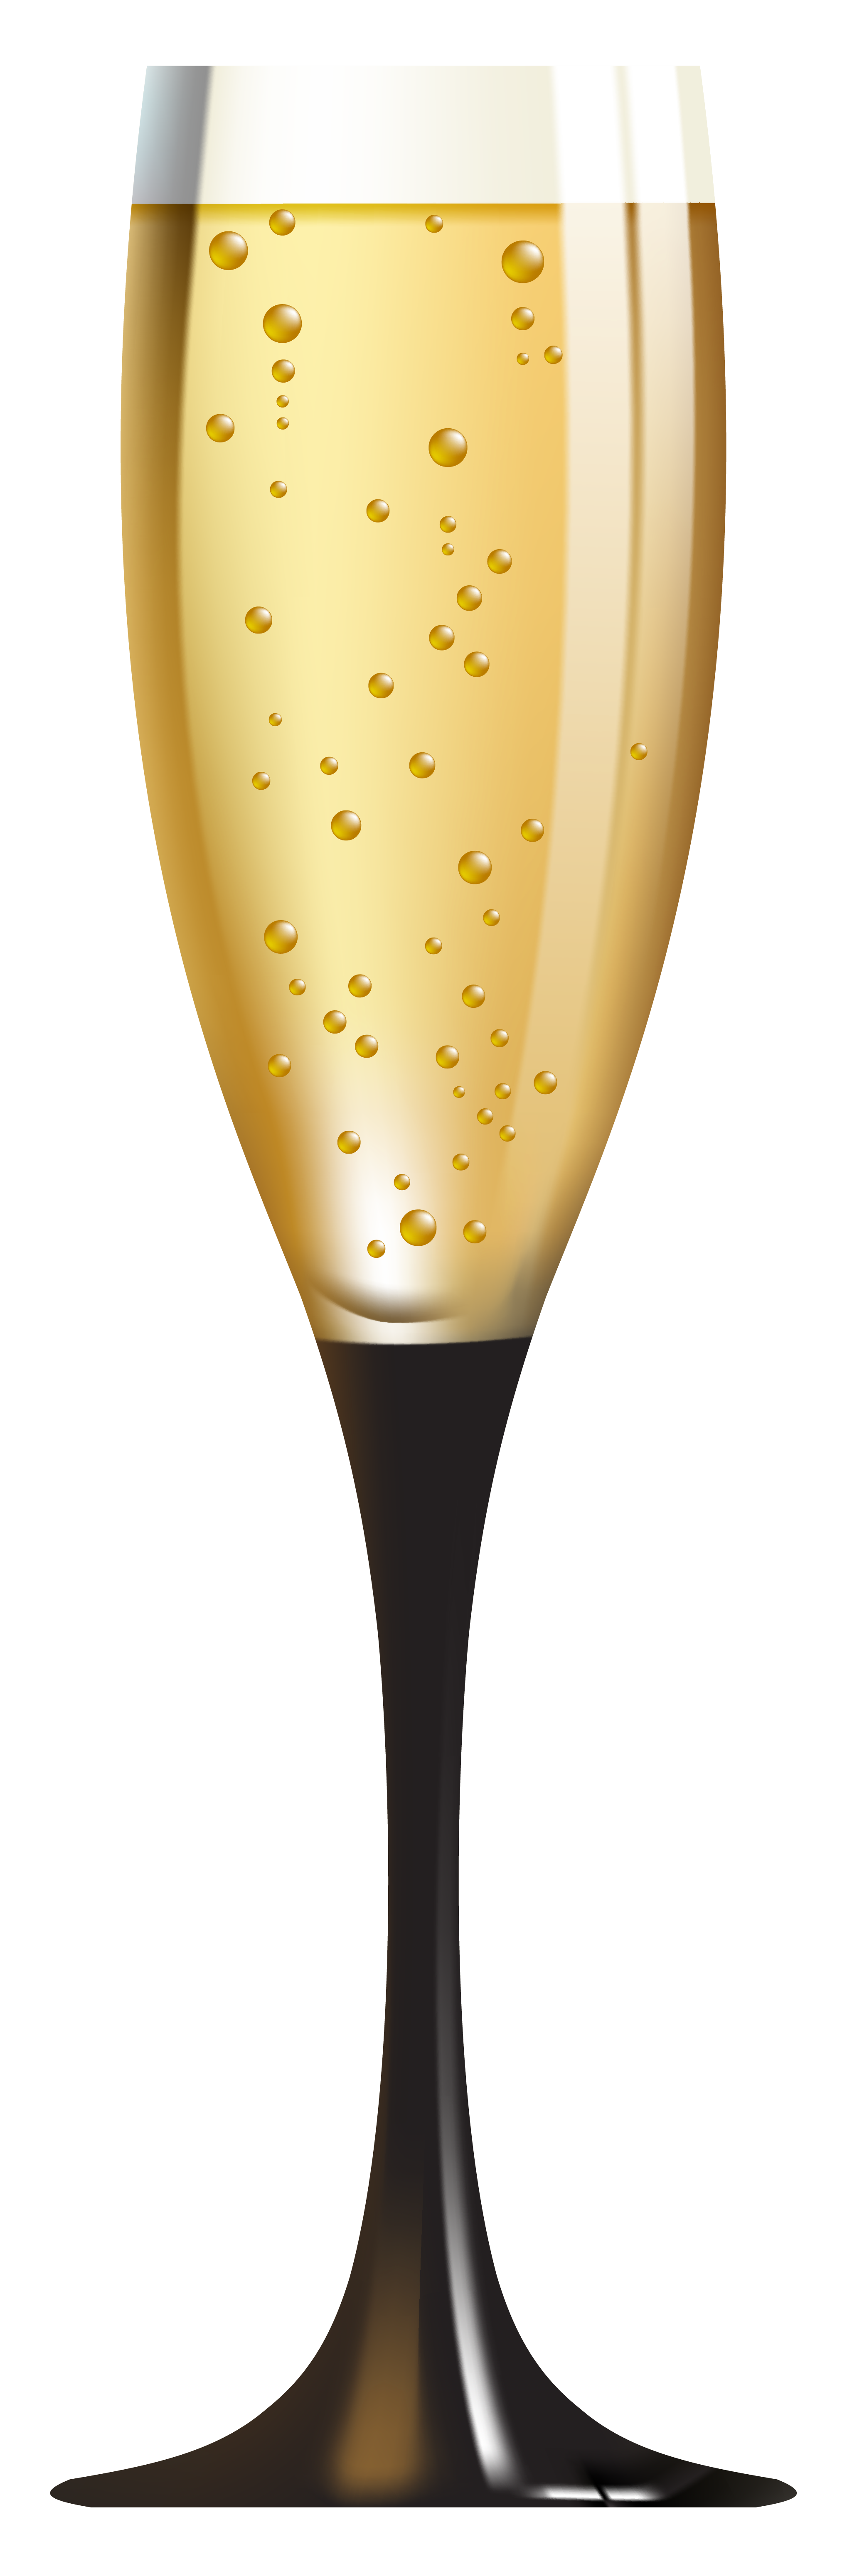 Champagne glass clip art free - Champagne Glass Clip Art